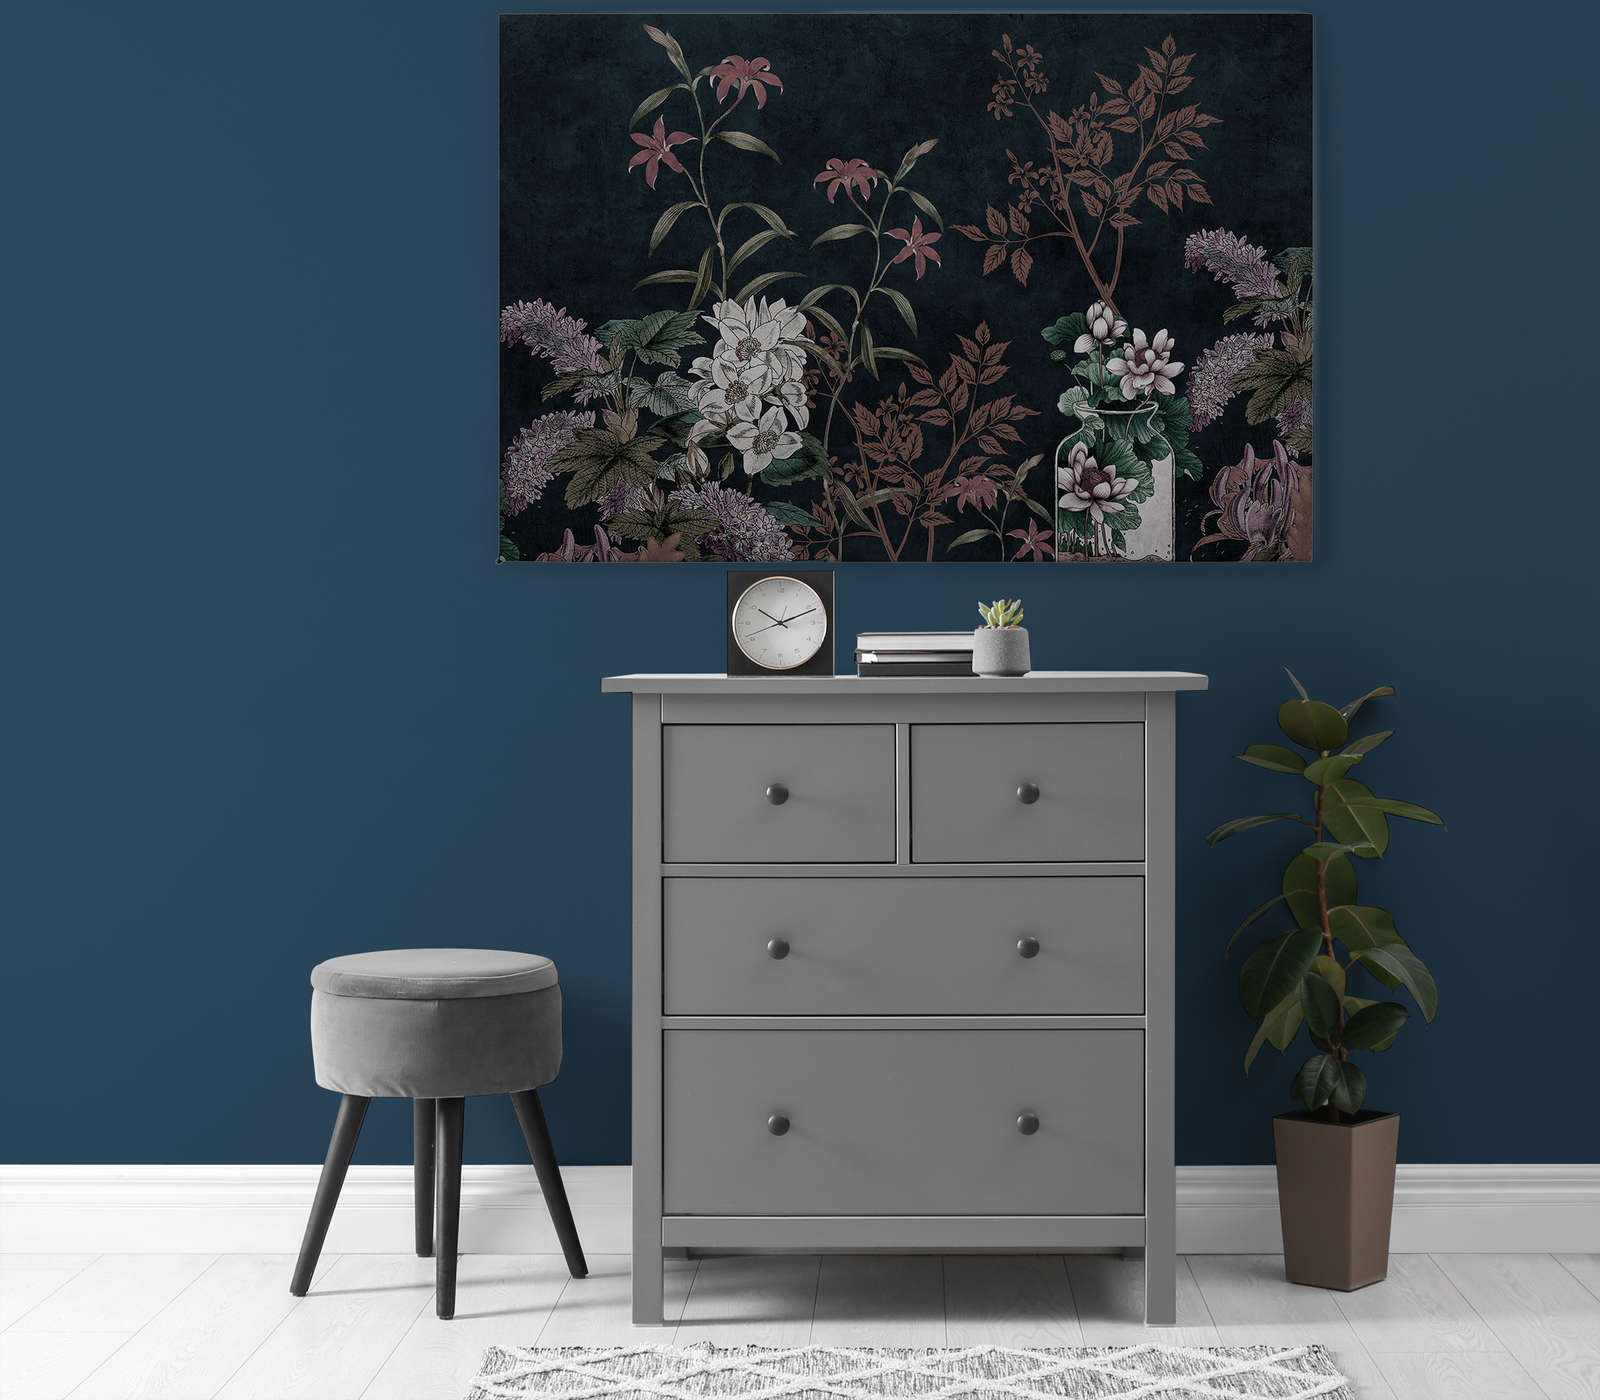             Dark Room 2 - Toile noire Botanical Muster Rosa - 1,20 m x 0,80 m
        